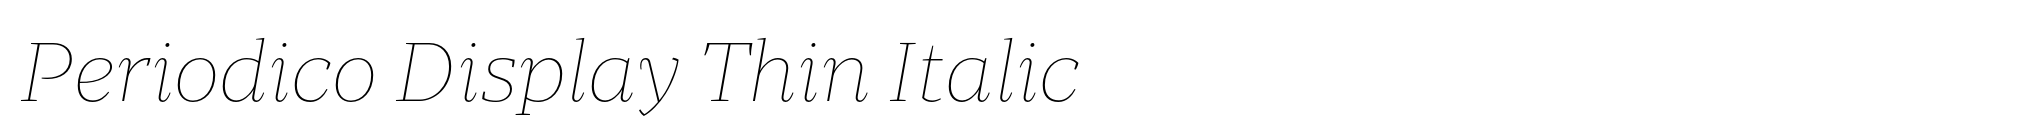 Periodico Display Thin Italic image